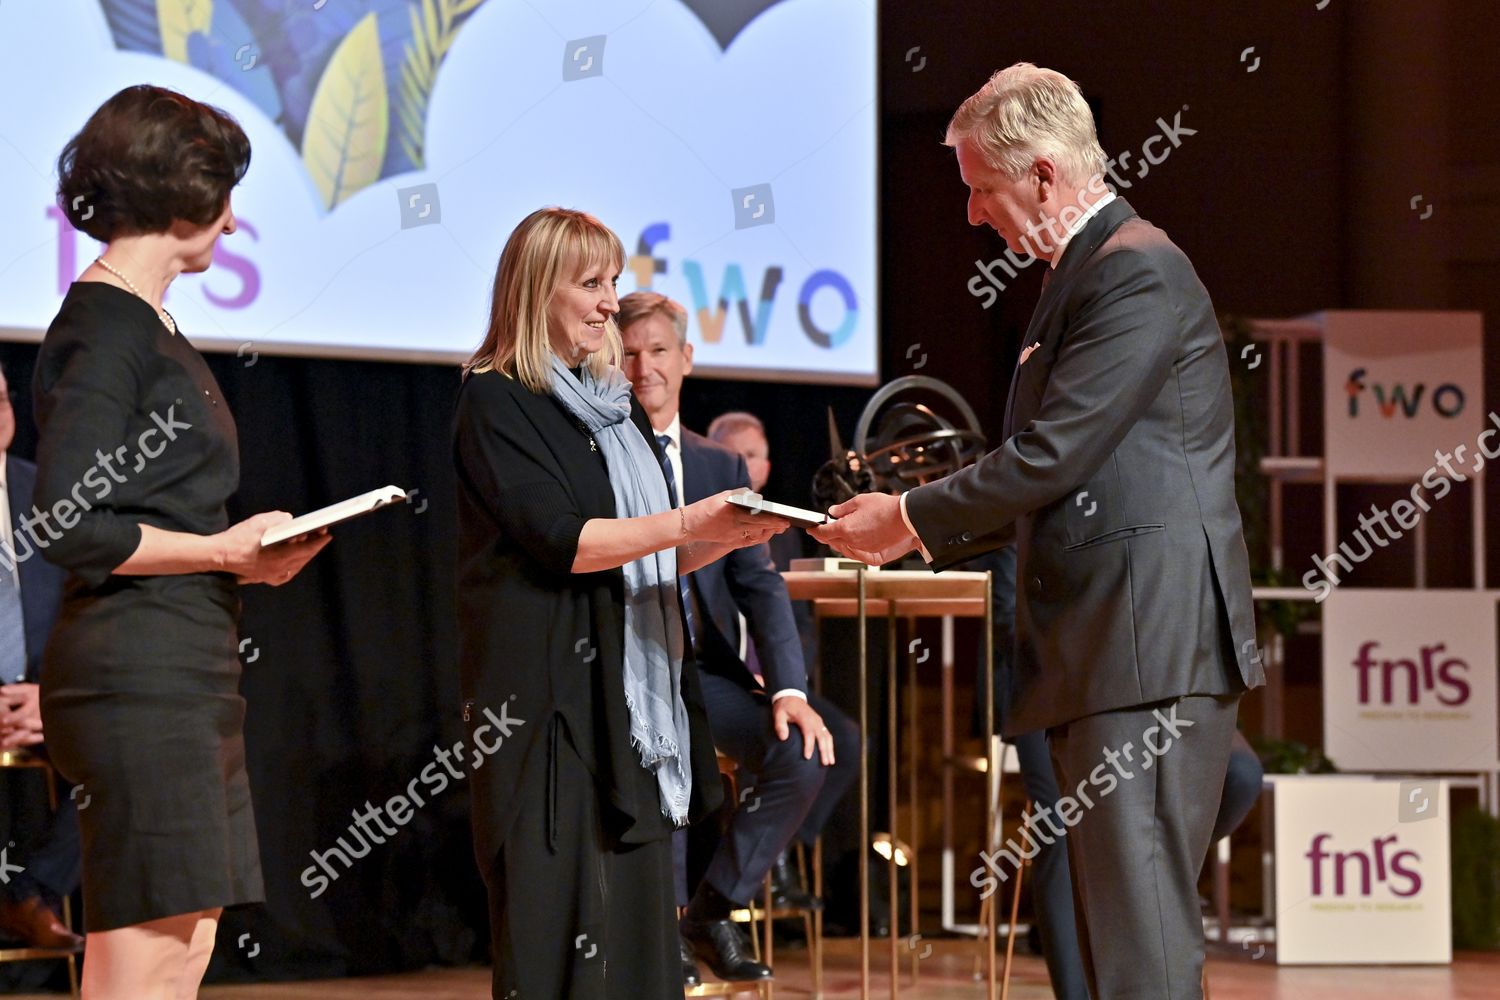 science-royals-scientific-excellence-awards-brussels-belgium-shutterstock-editorial-12523234g.jpg